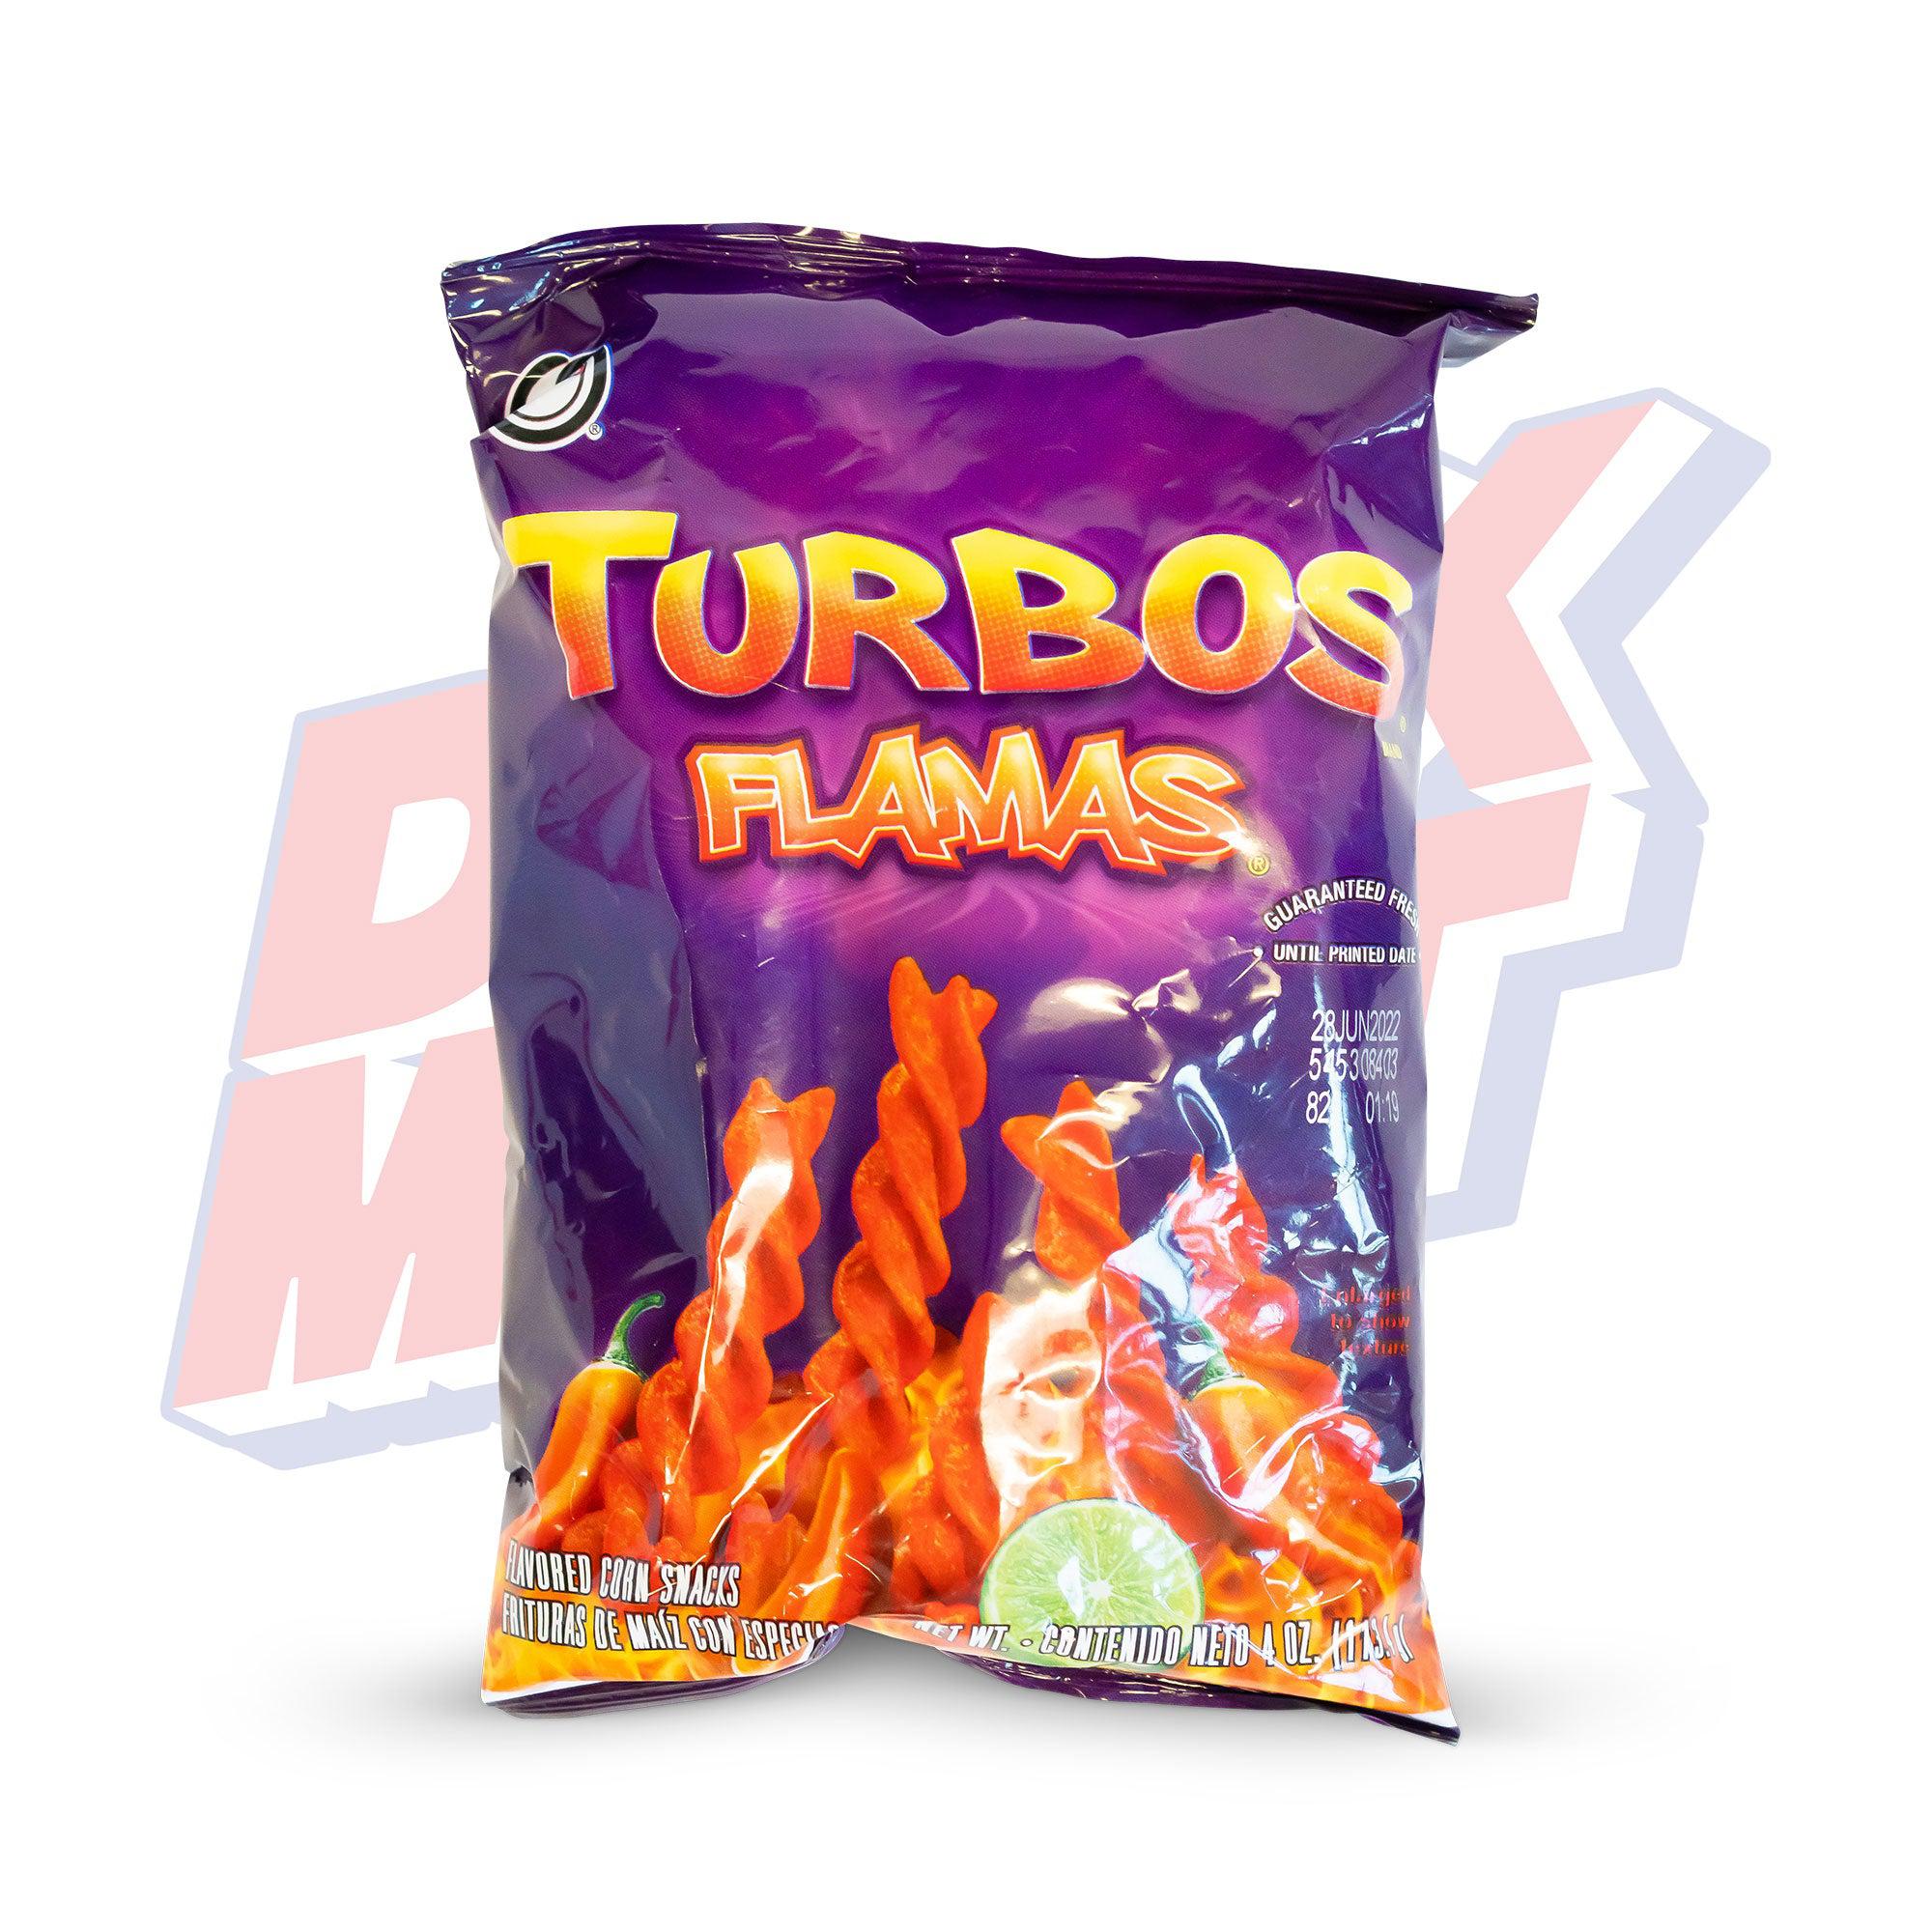 Turbos Flamas - 4oz